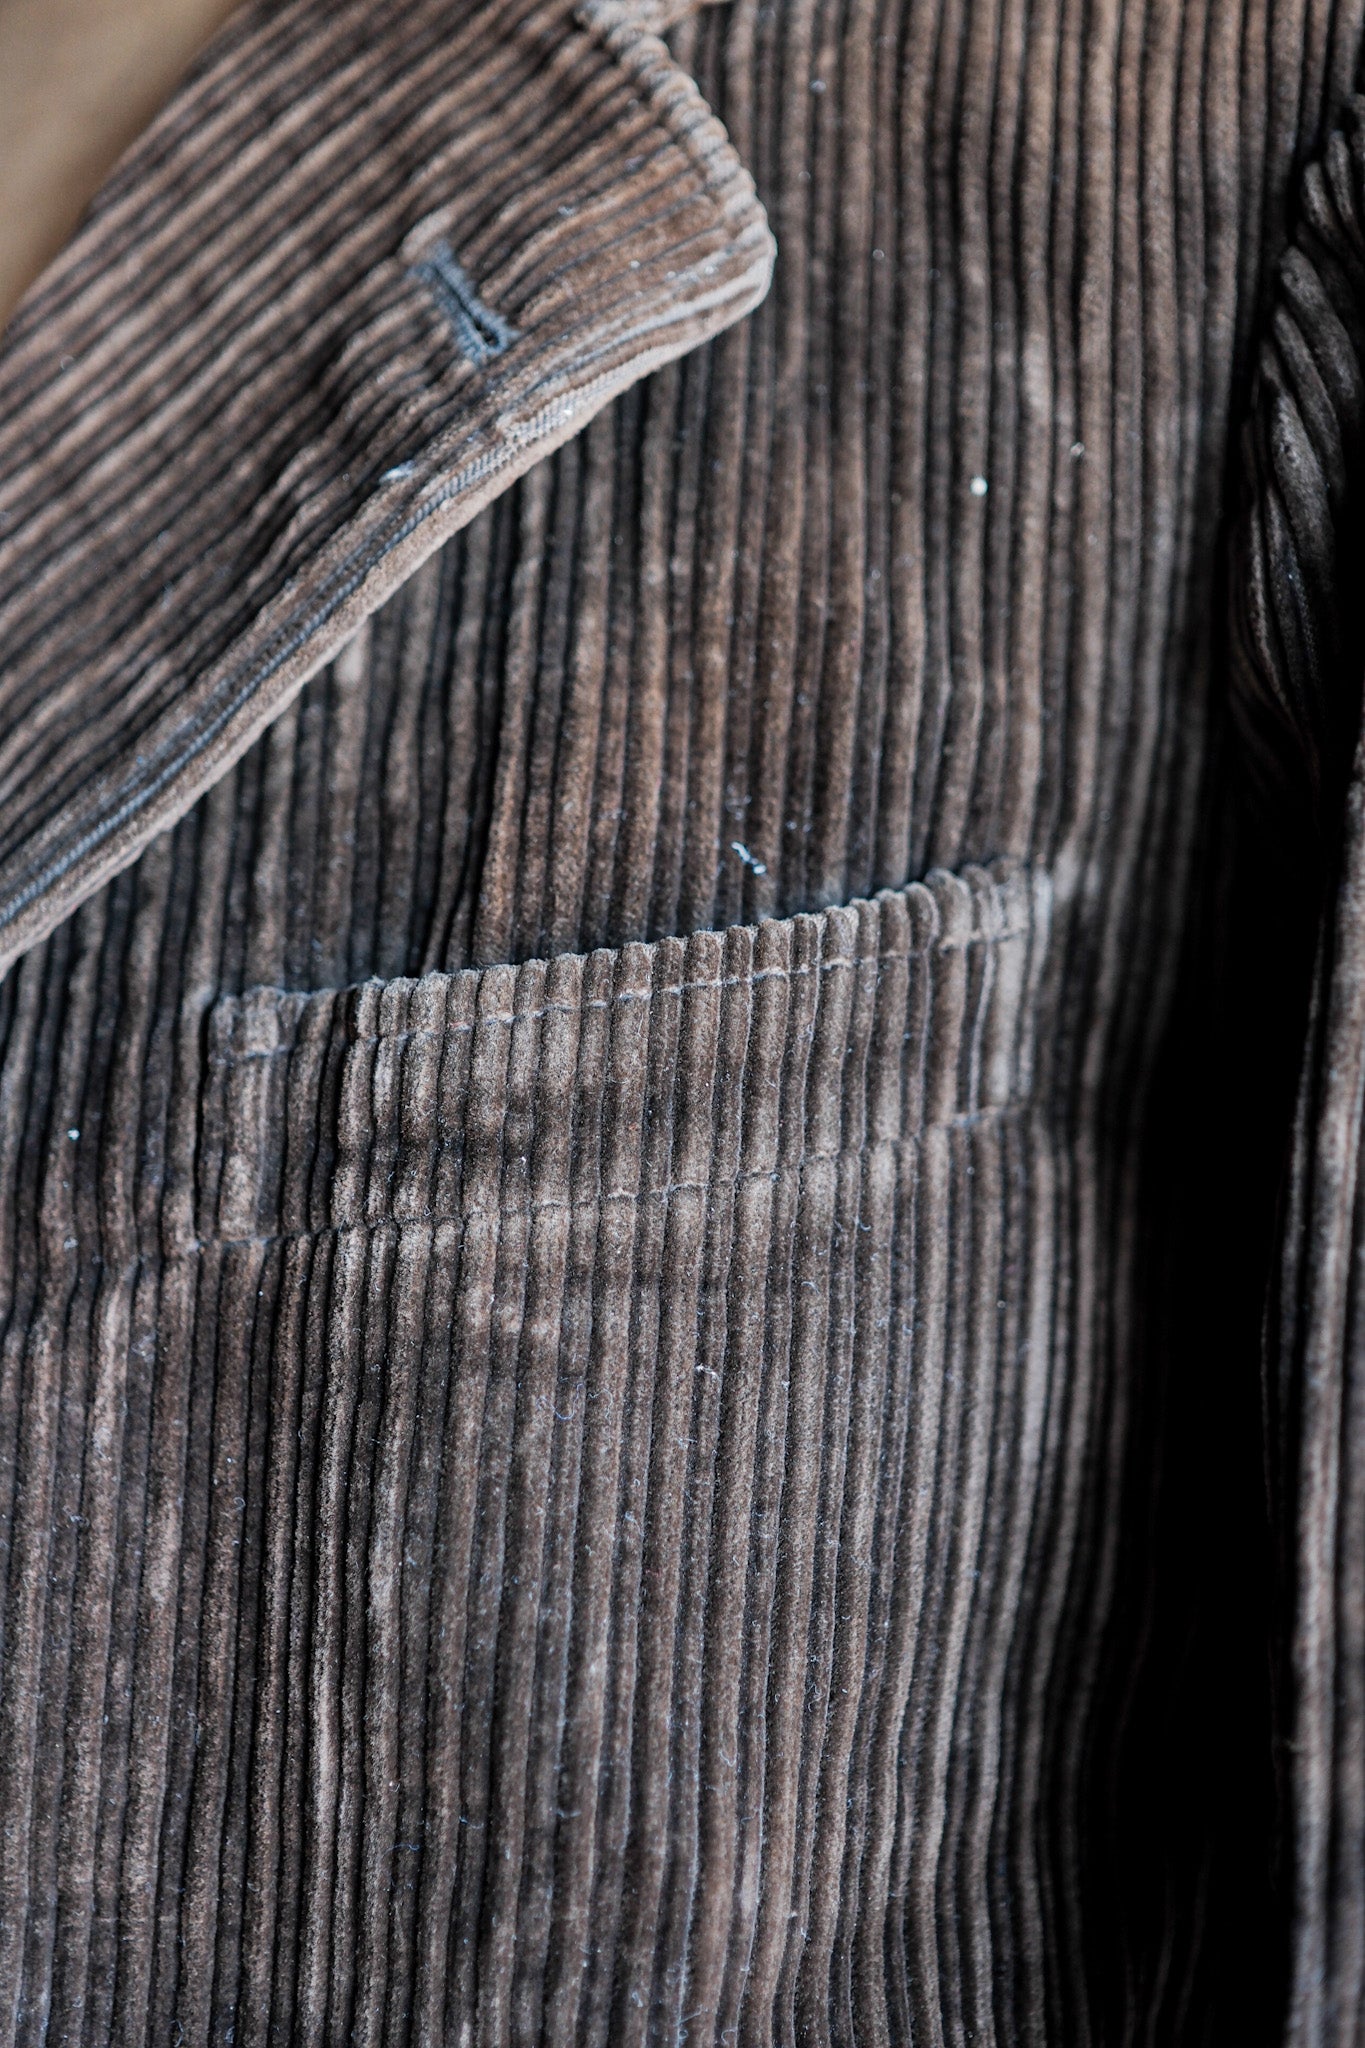 【~30’s】French Vintage Brown Corduroy Lapel Work Jacket